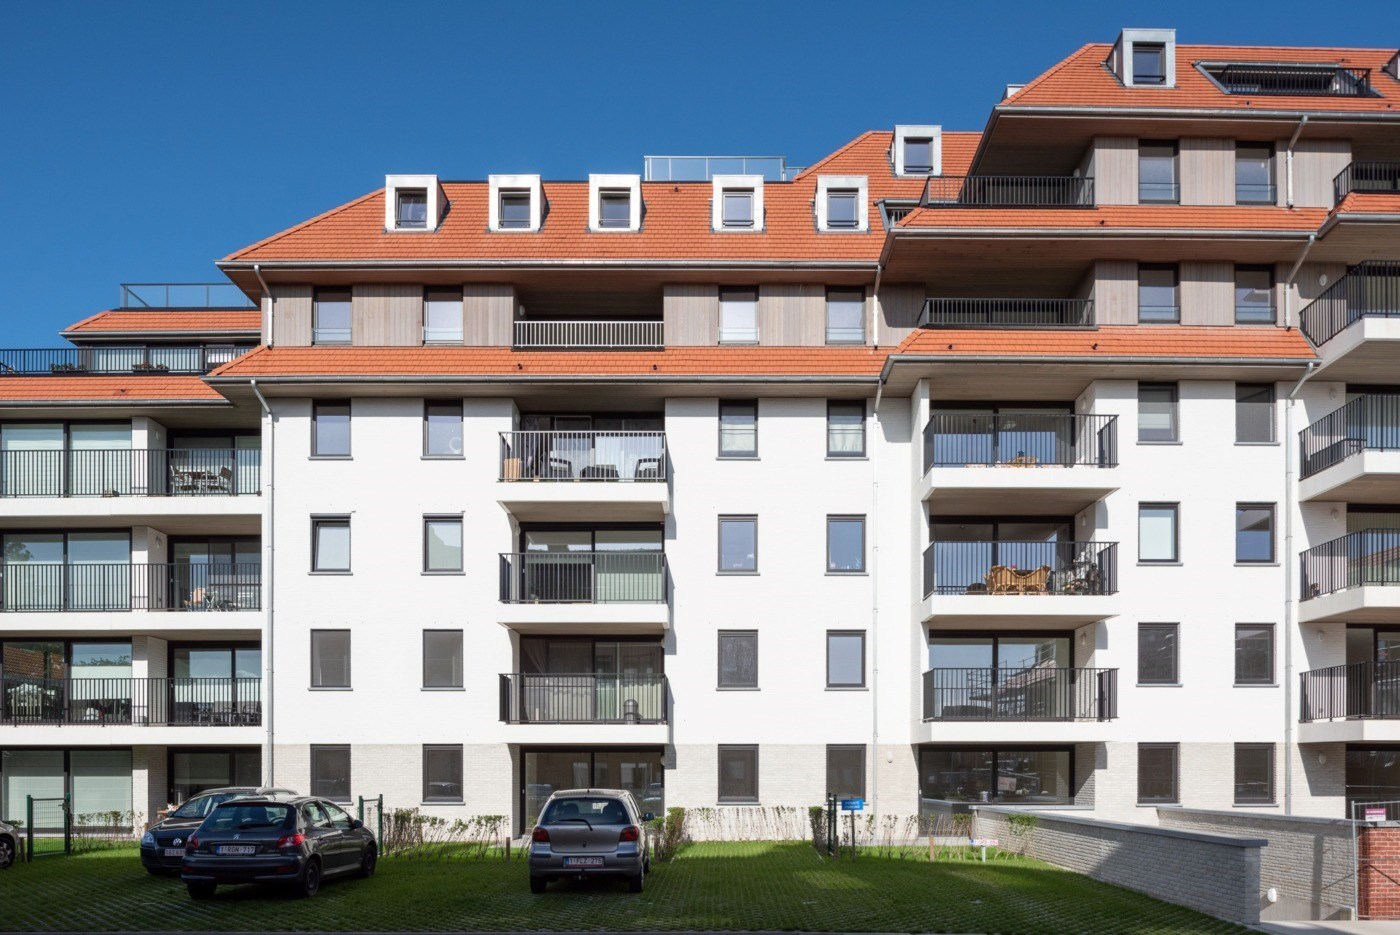 Recent appartement in residentie 't Zuid- 2 slaapkamers + terras + dubbele parking. foto 1